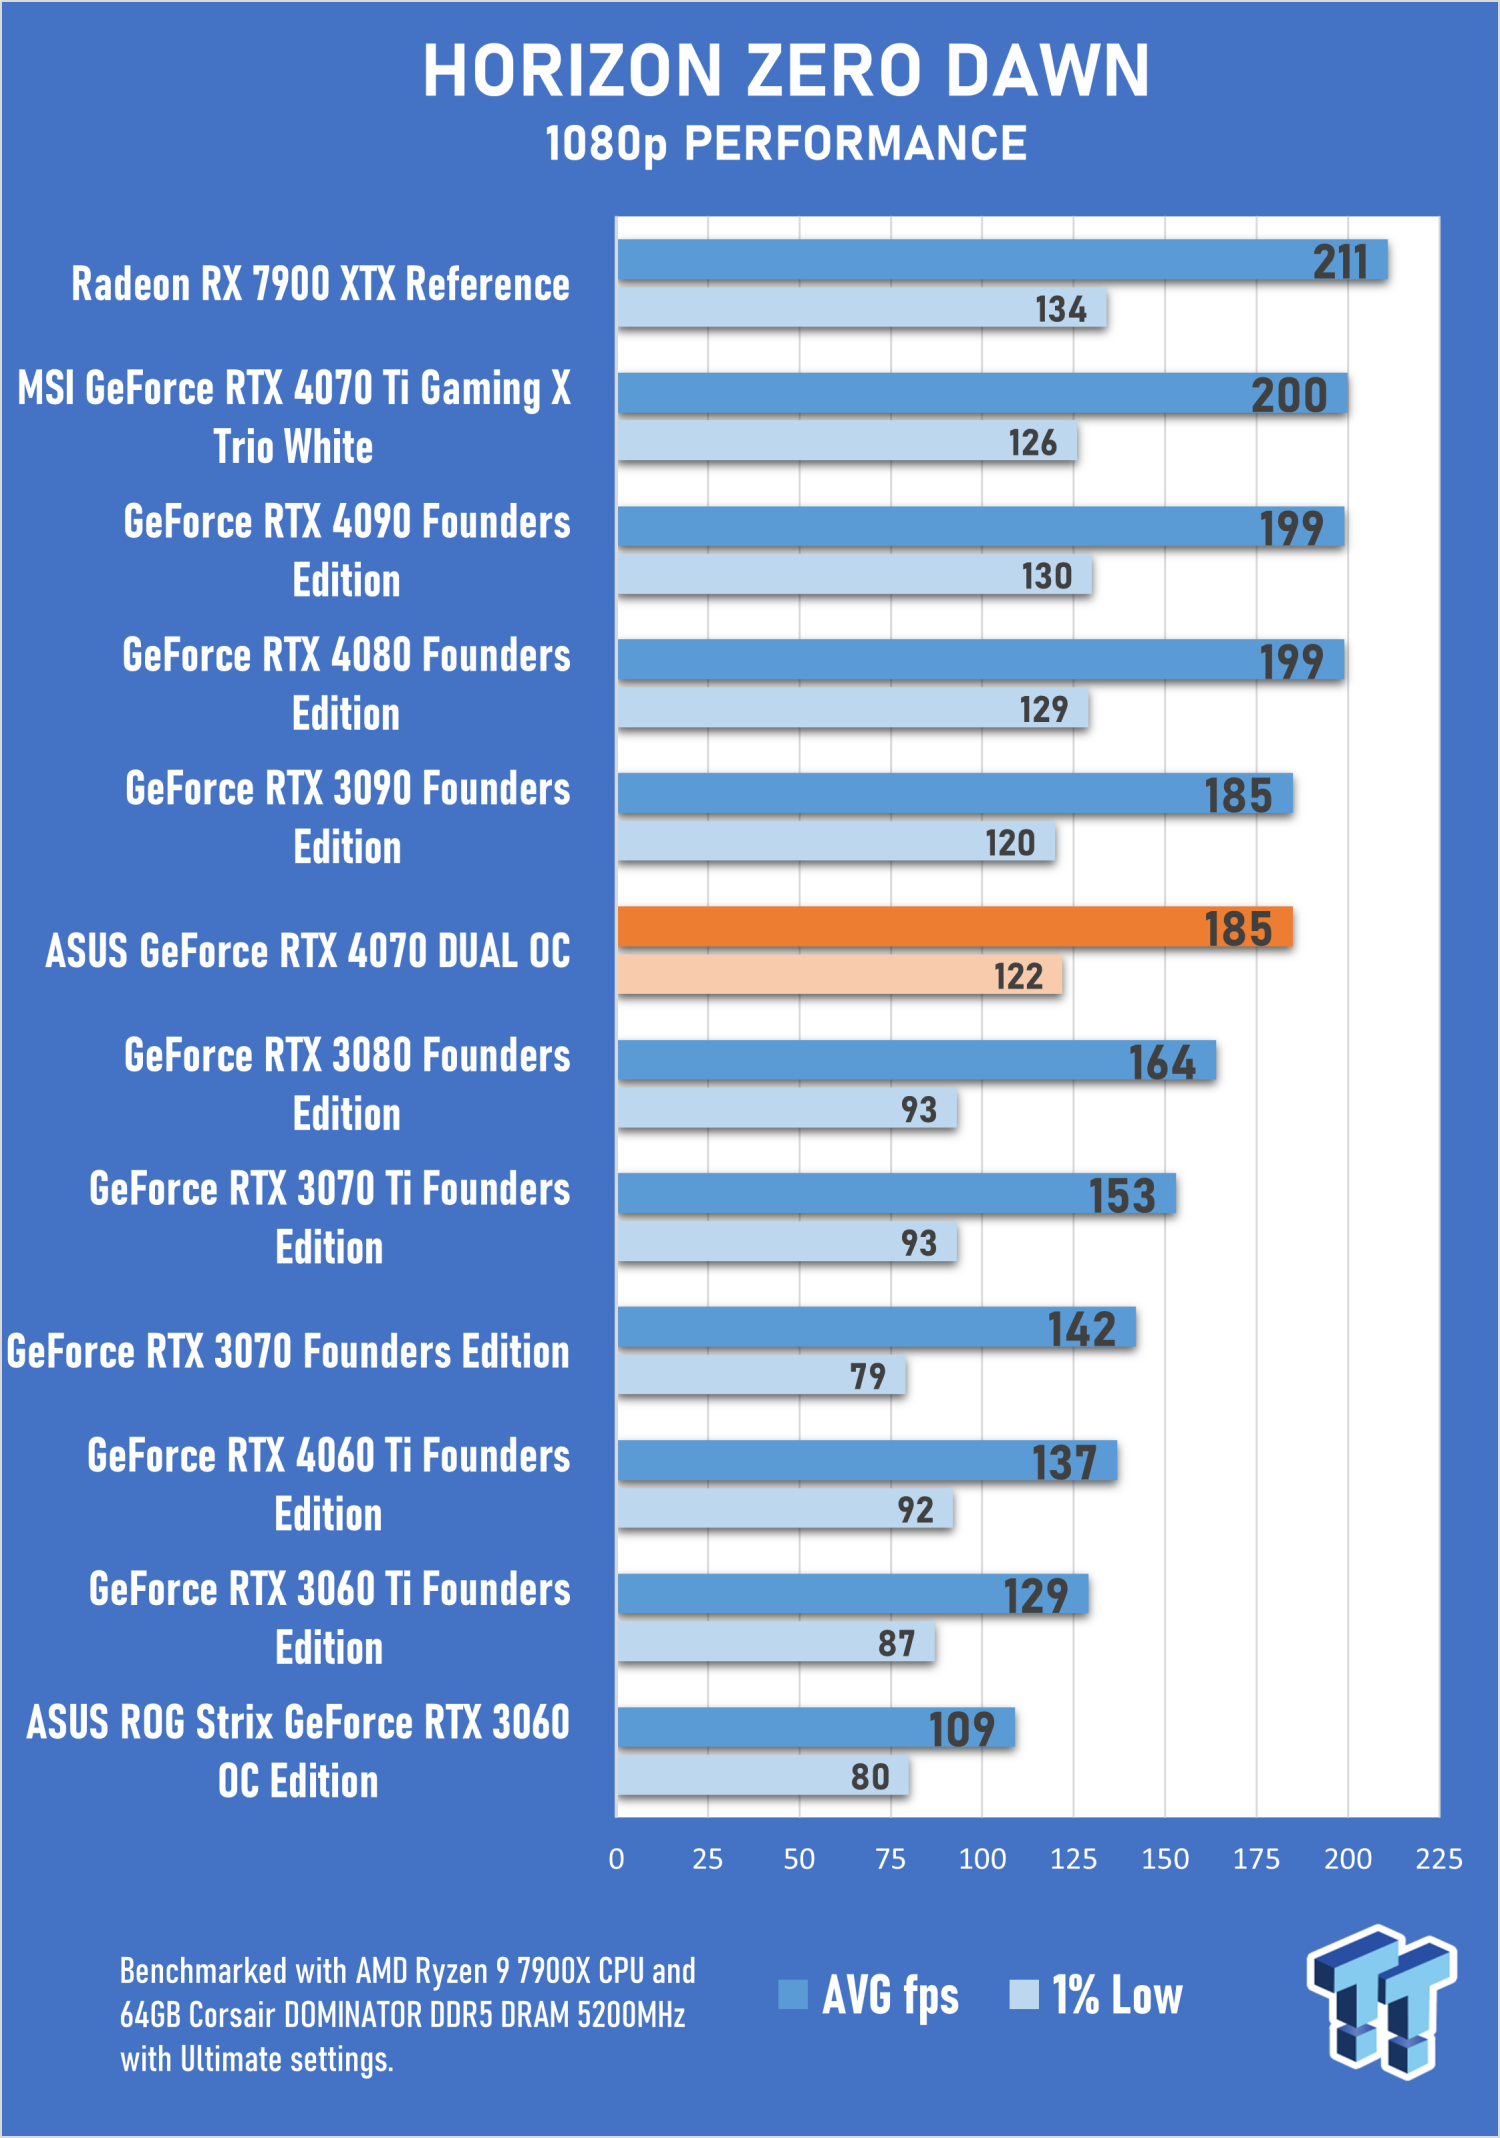 Alan Wake 2 Performance Benchmark Review - 30 GPUs Tested - Performance &  VRAM Usage